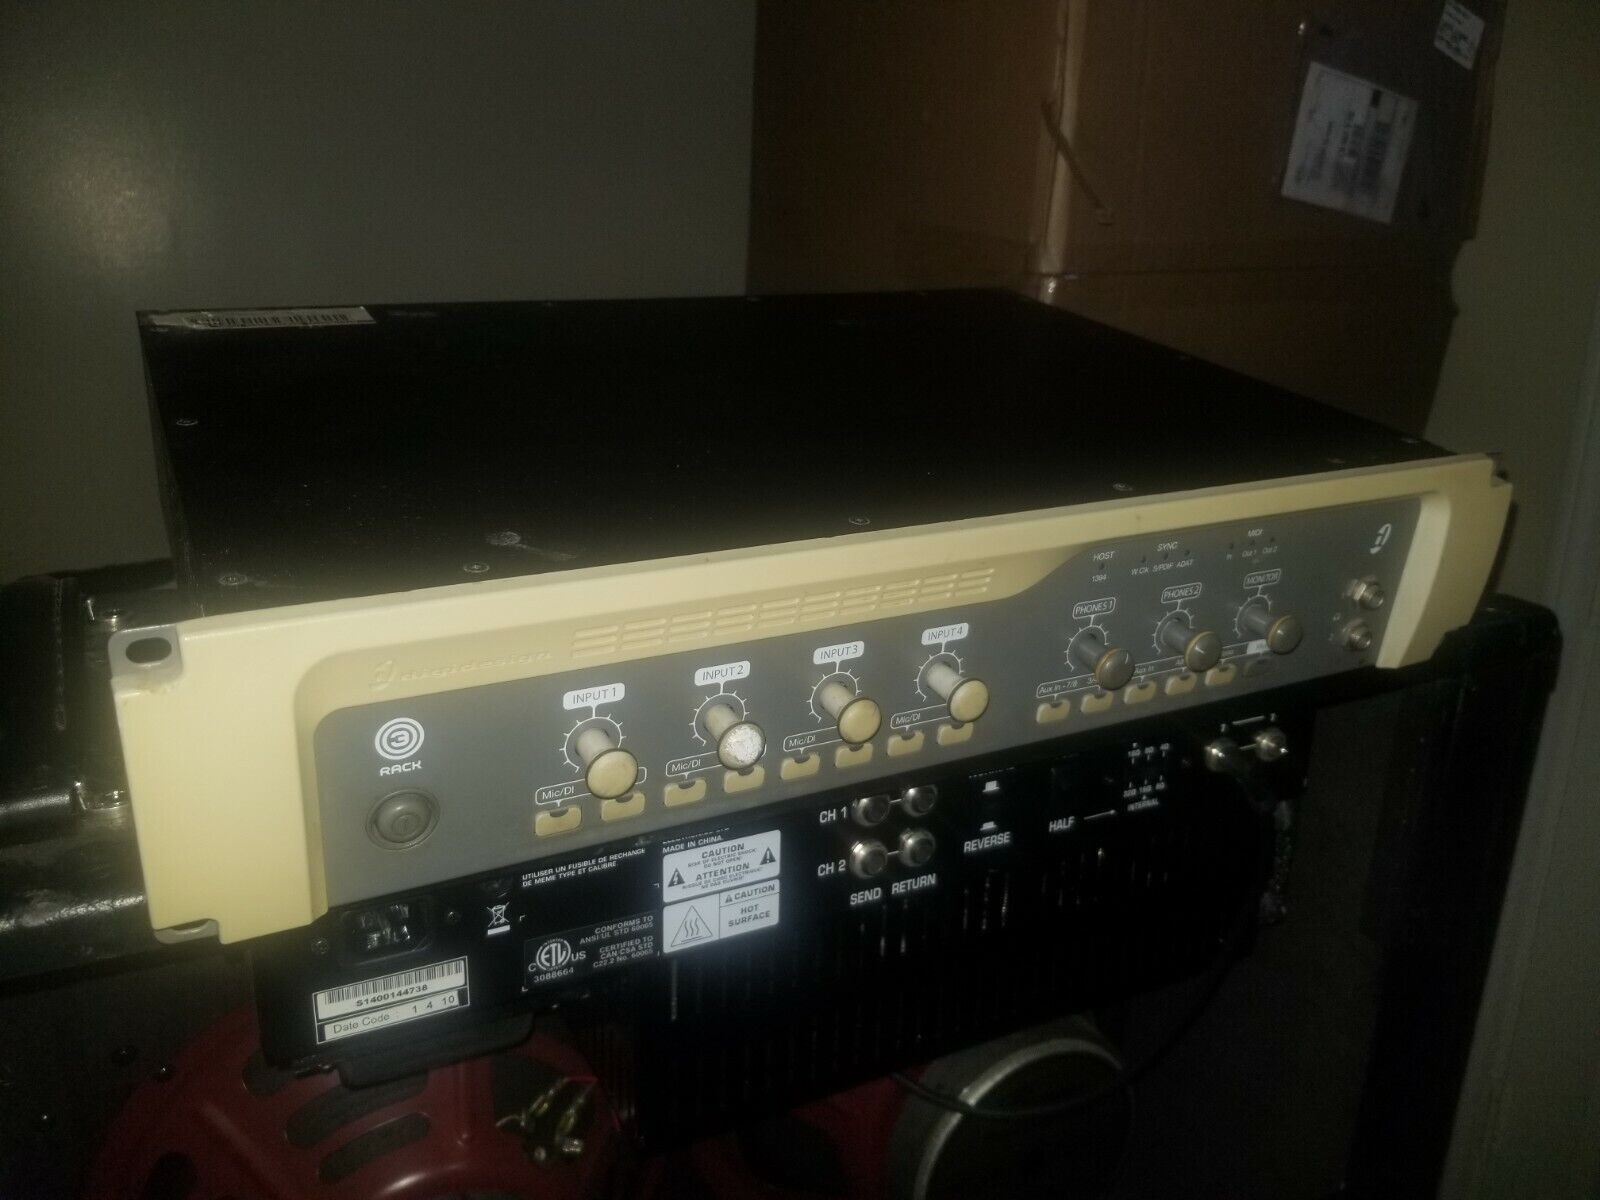 Digidesign 003 Rack Factory MIDI Firewire Audio Interface Digital Mixer System